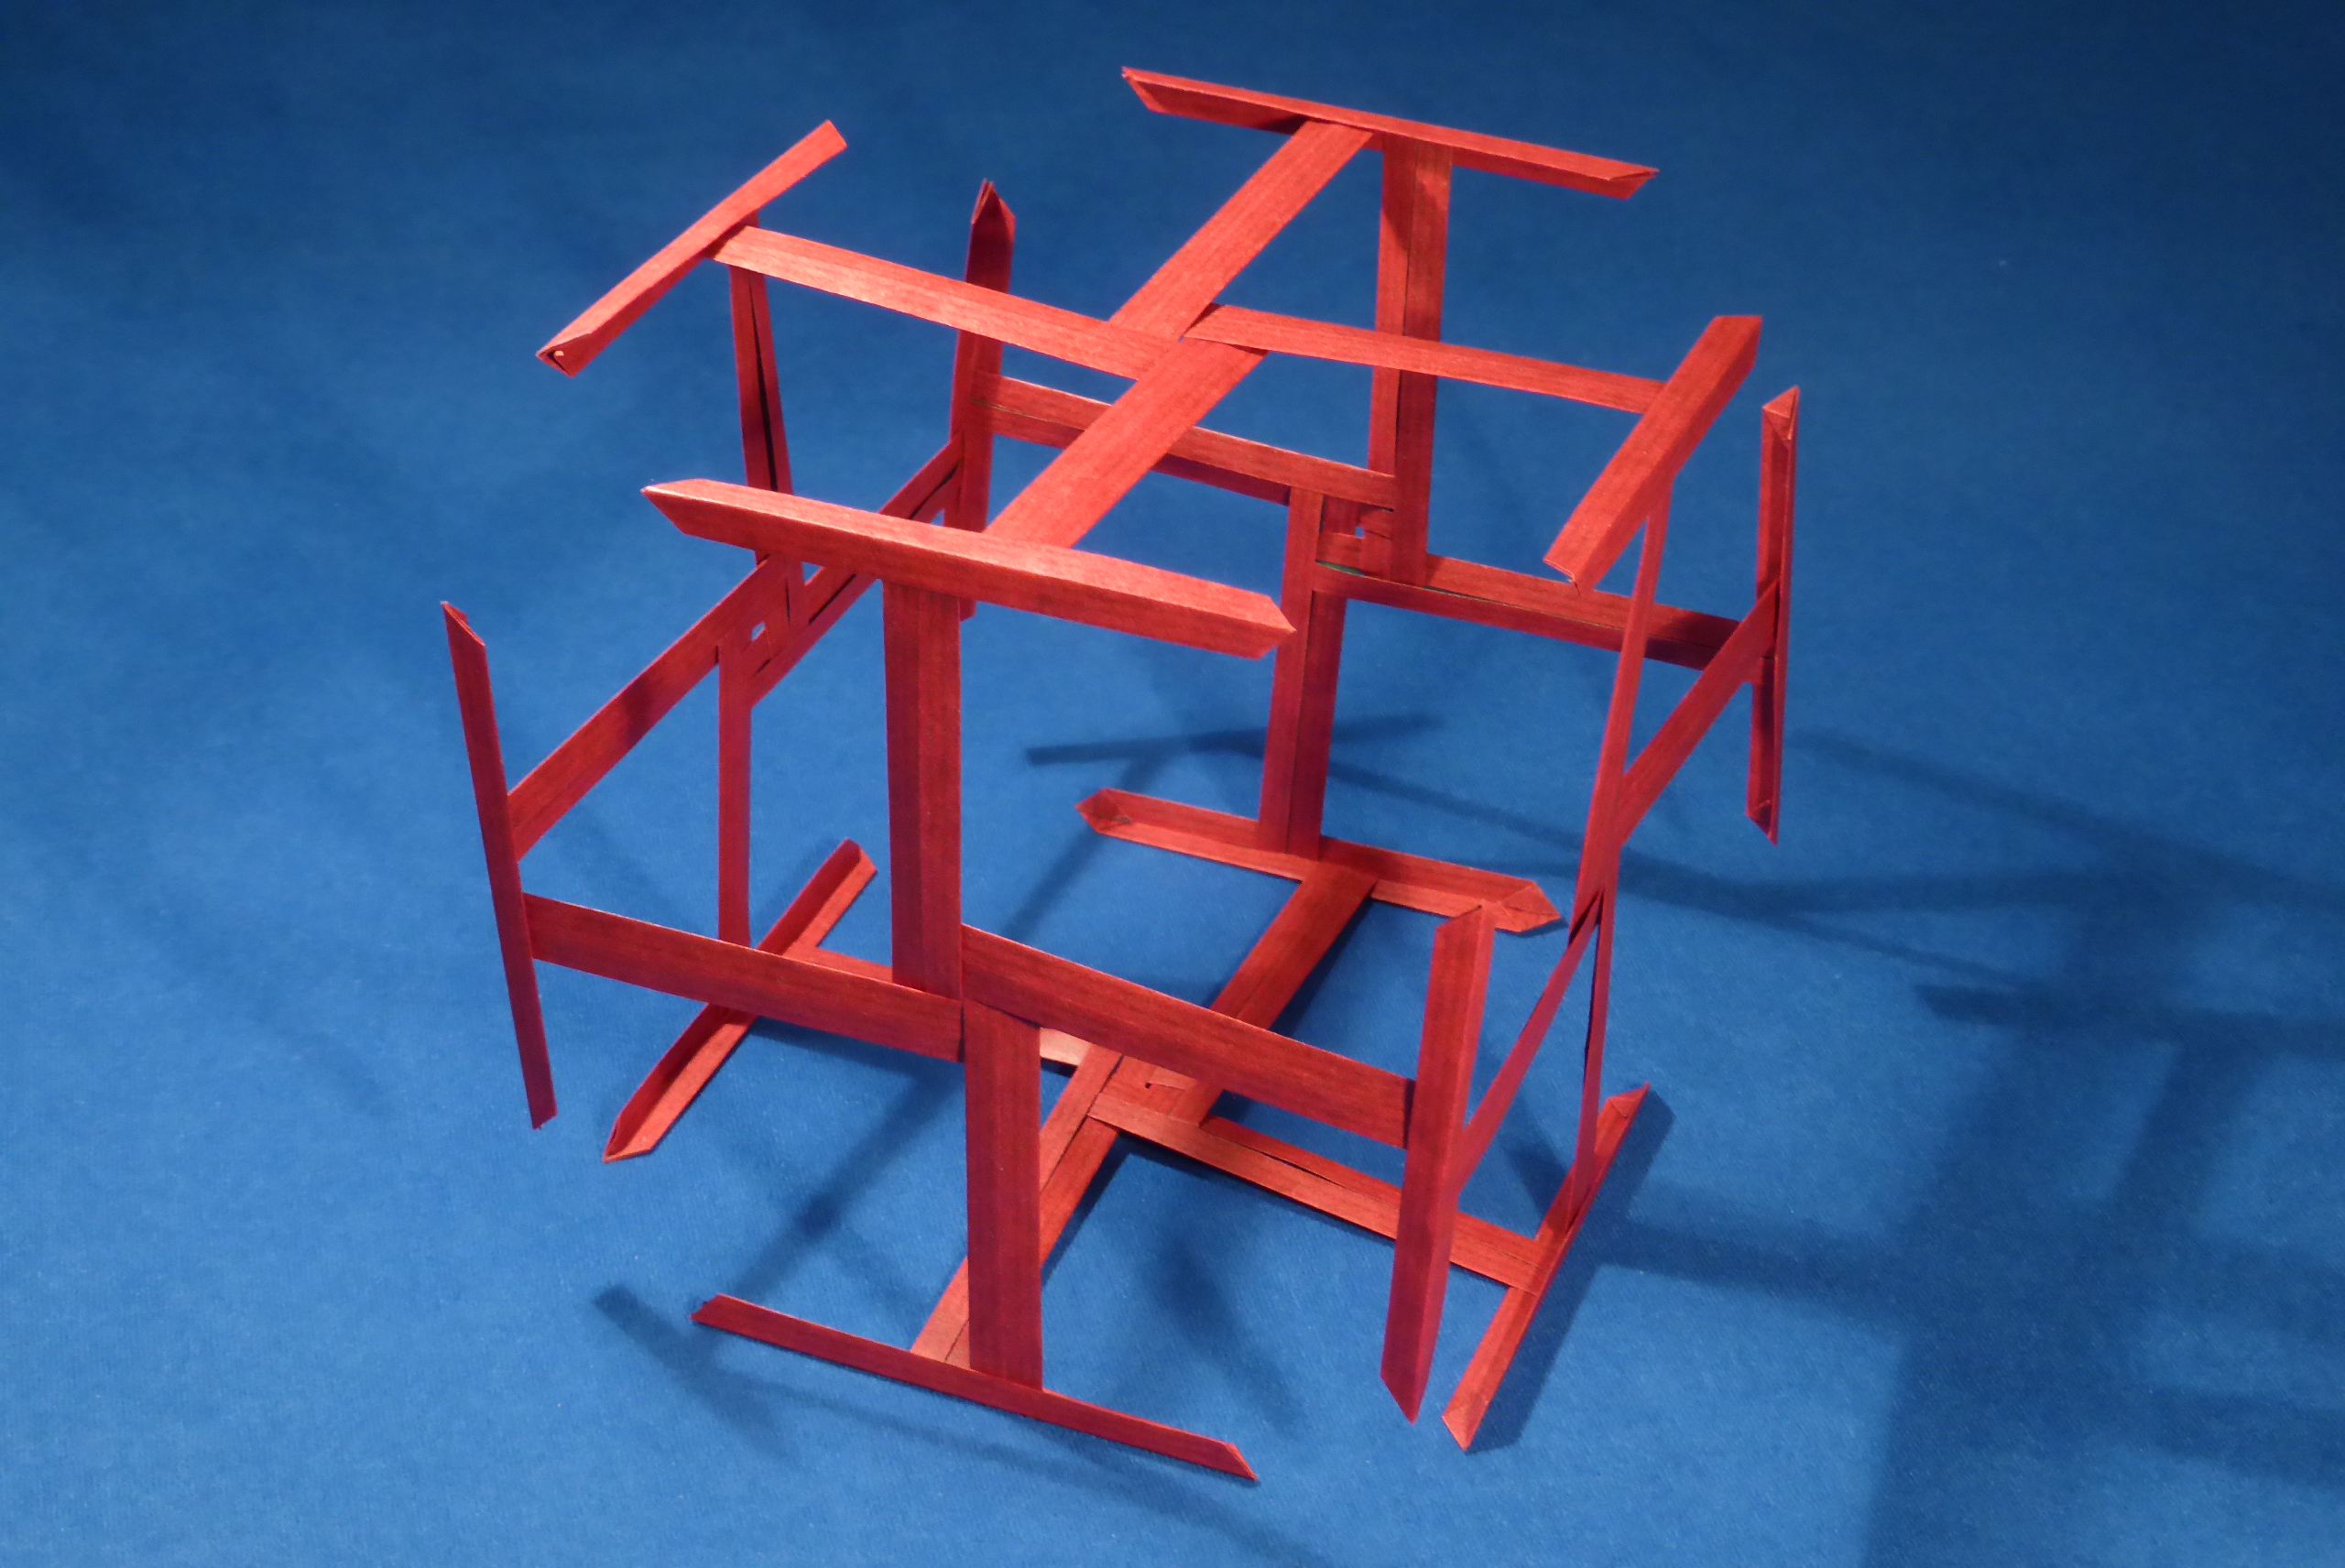 Woven Slit Module (WSM) - Origami by Michał Kosmulski